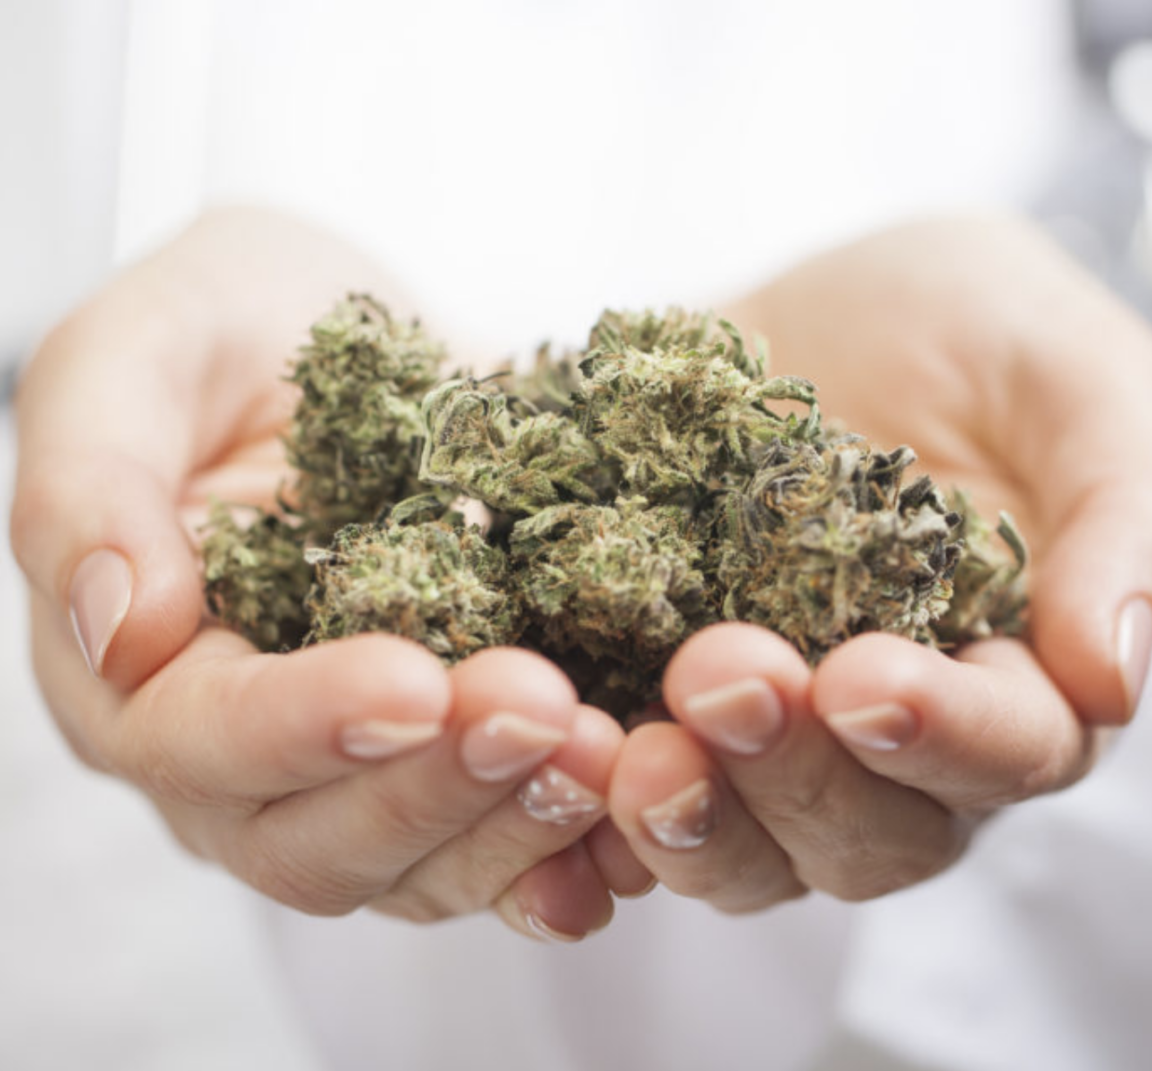 Legislature Eases PA Medical Marijuana Rules & Regulations